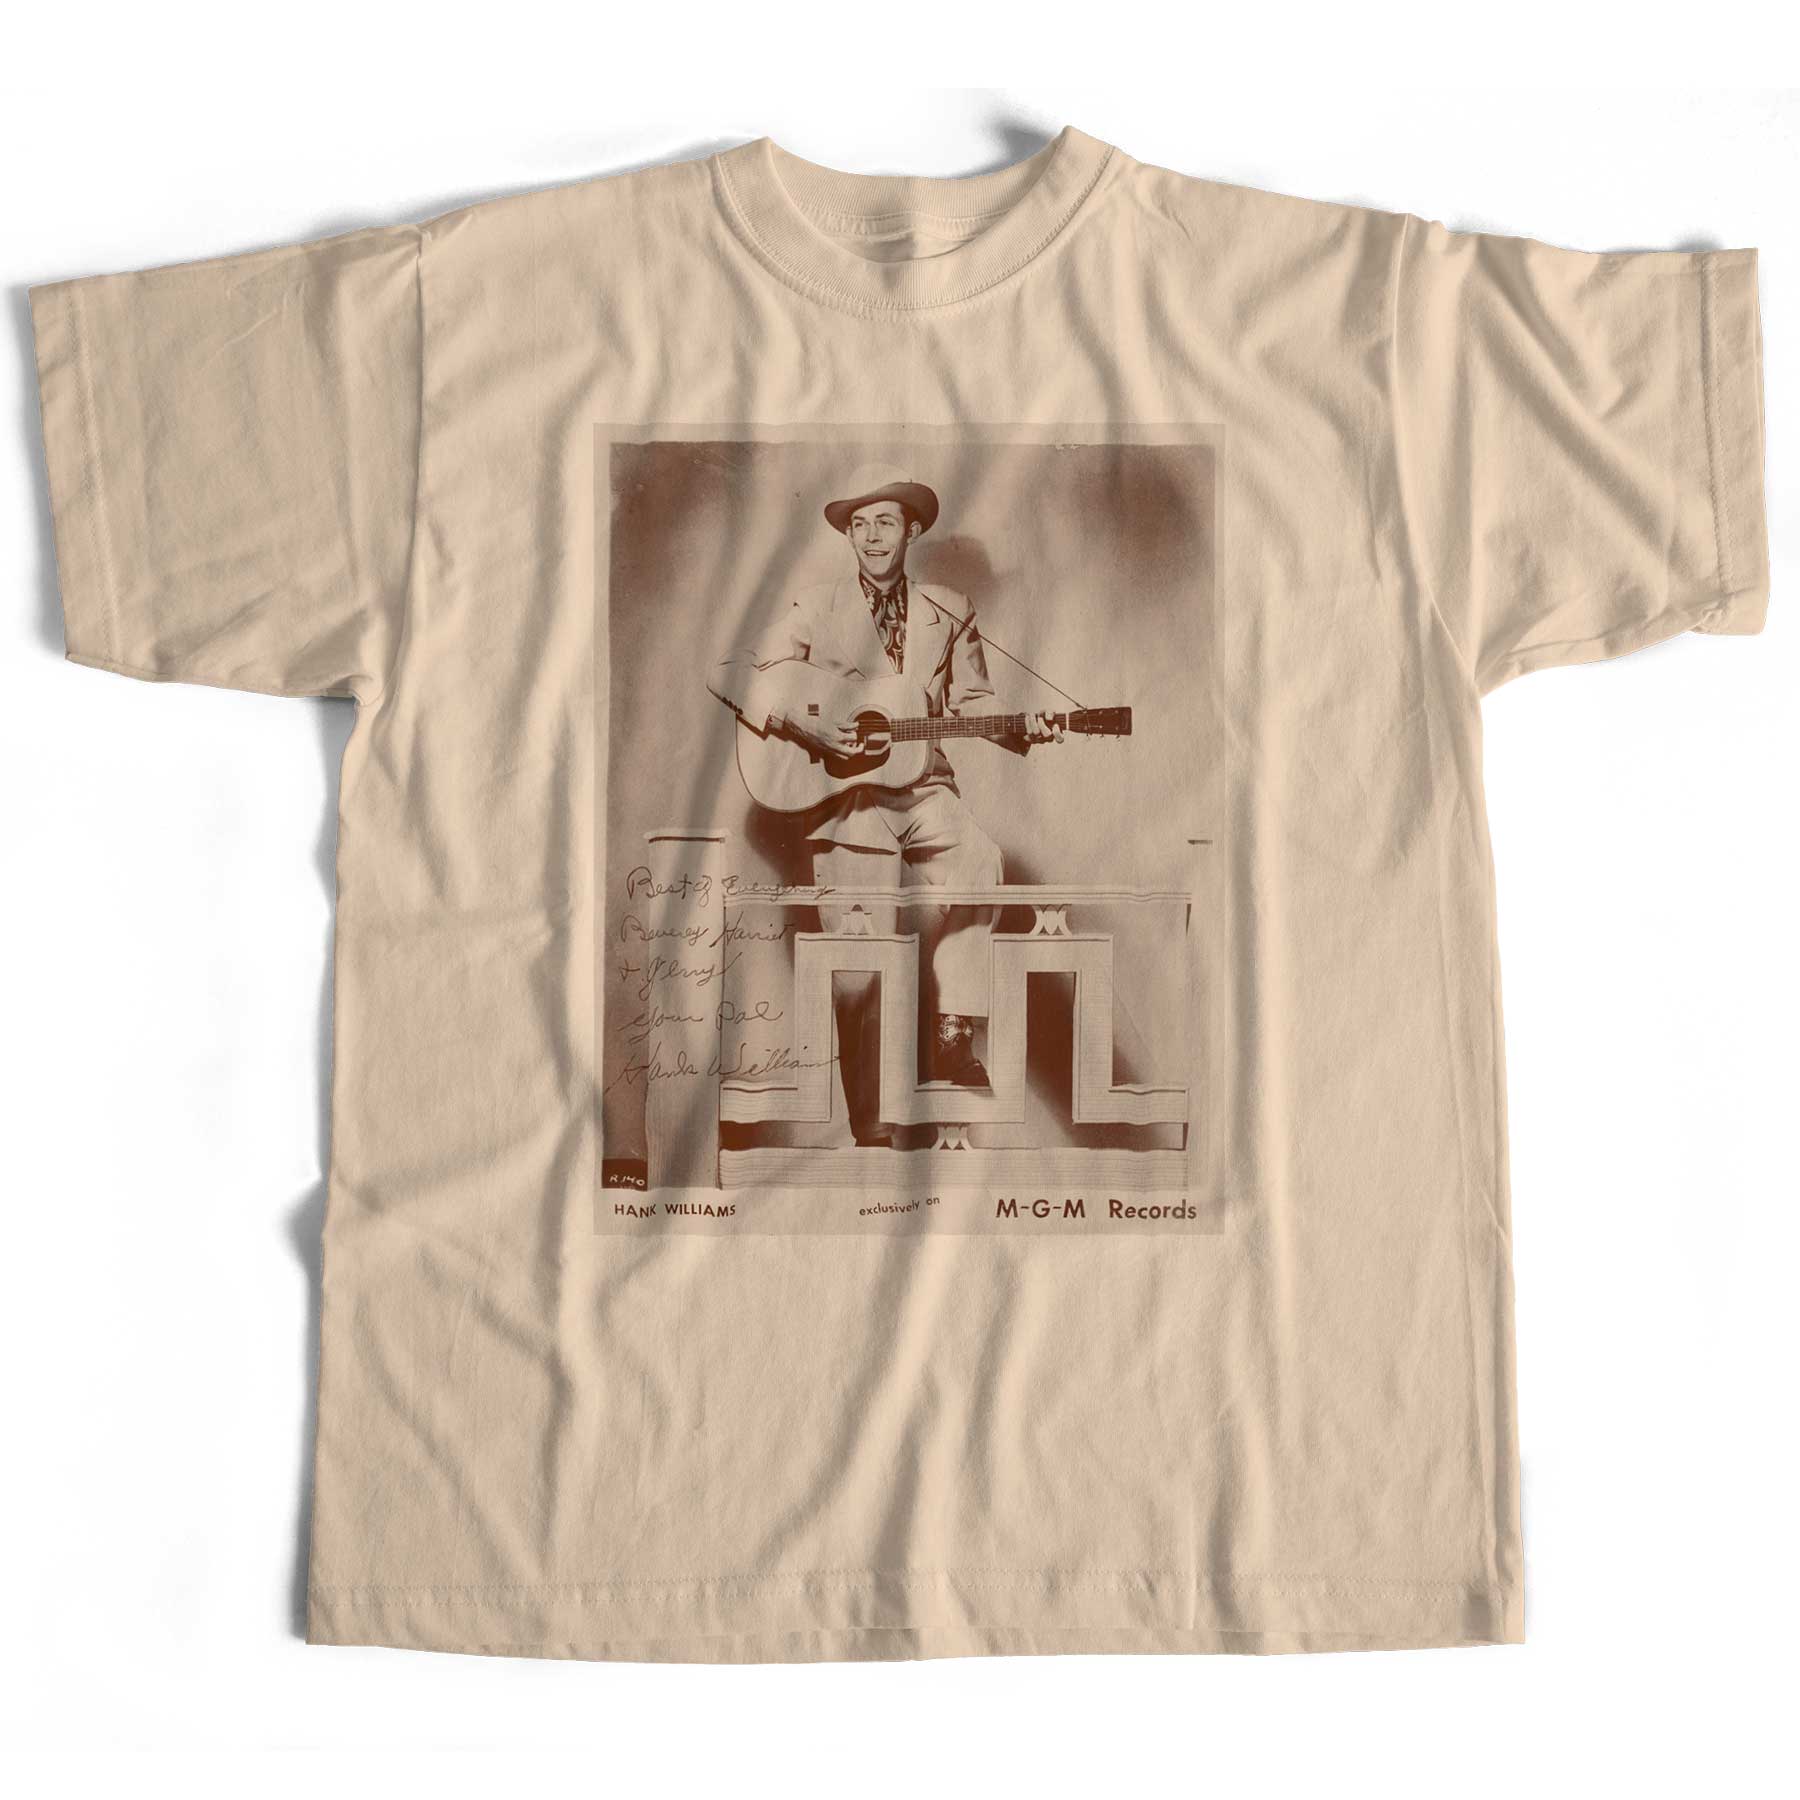 Old Skool Hooligans Hank Williams T Shirt - Signed Promo